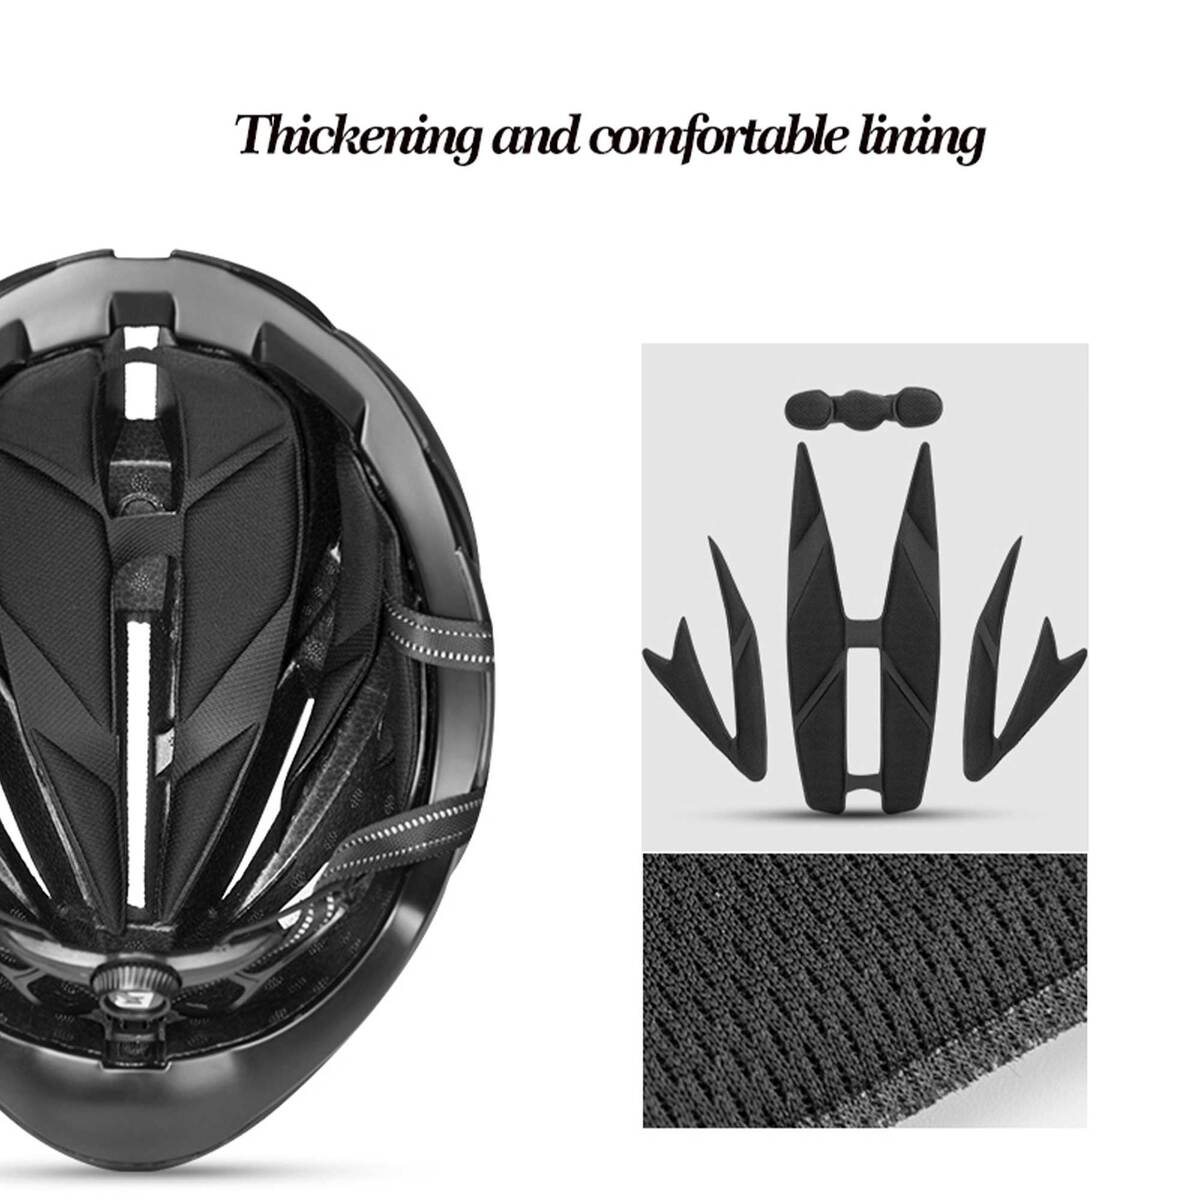 ROCKBROS Cycling Helmet LK-1TI Titanium